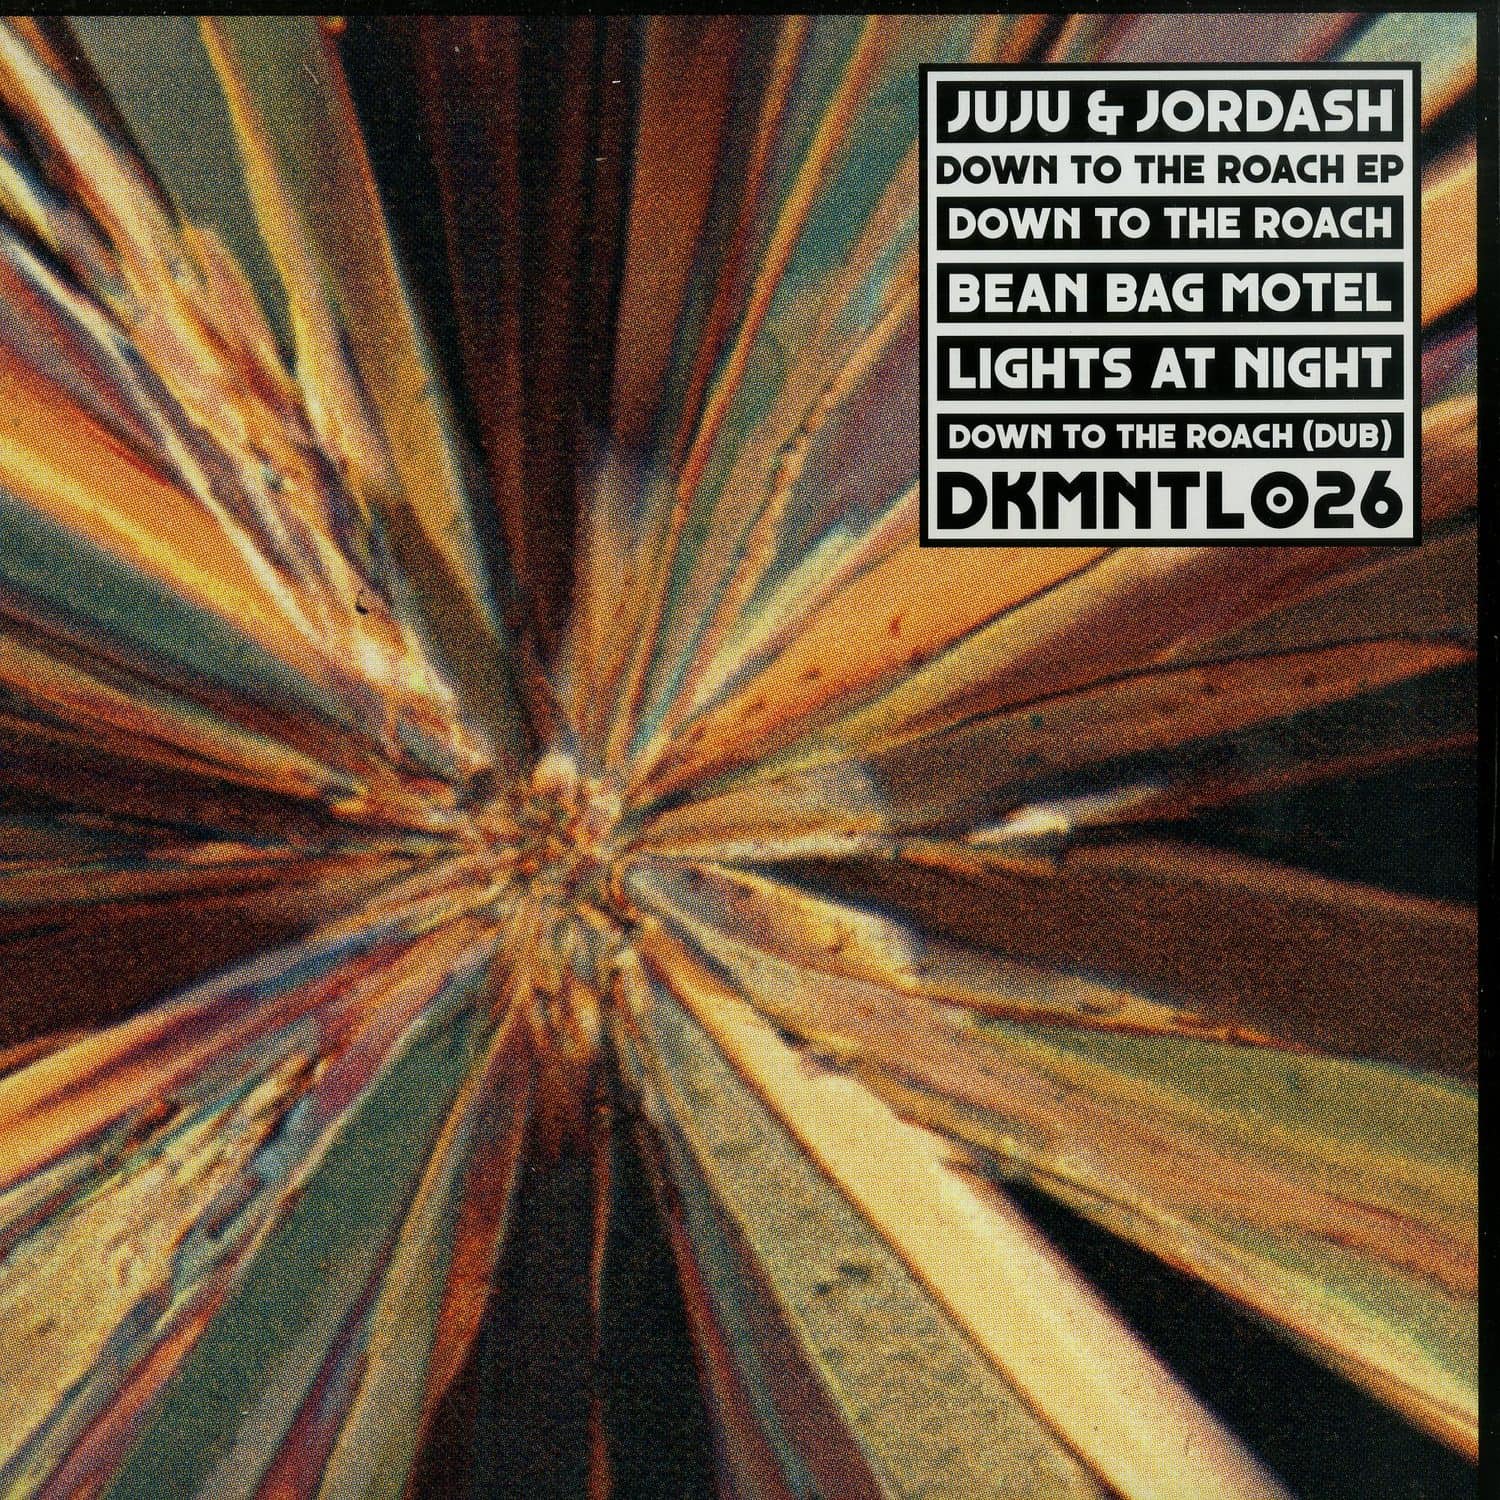 Juju & Jordash - DOWN TO THE ROACH EP